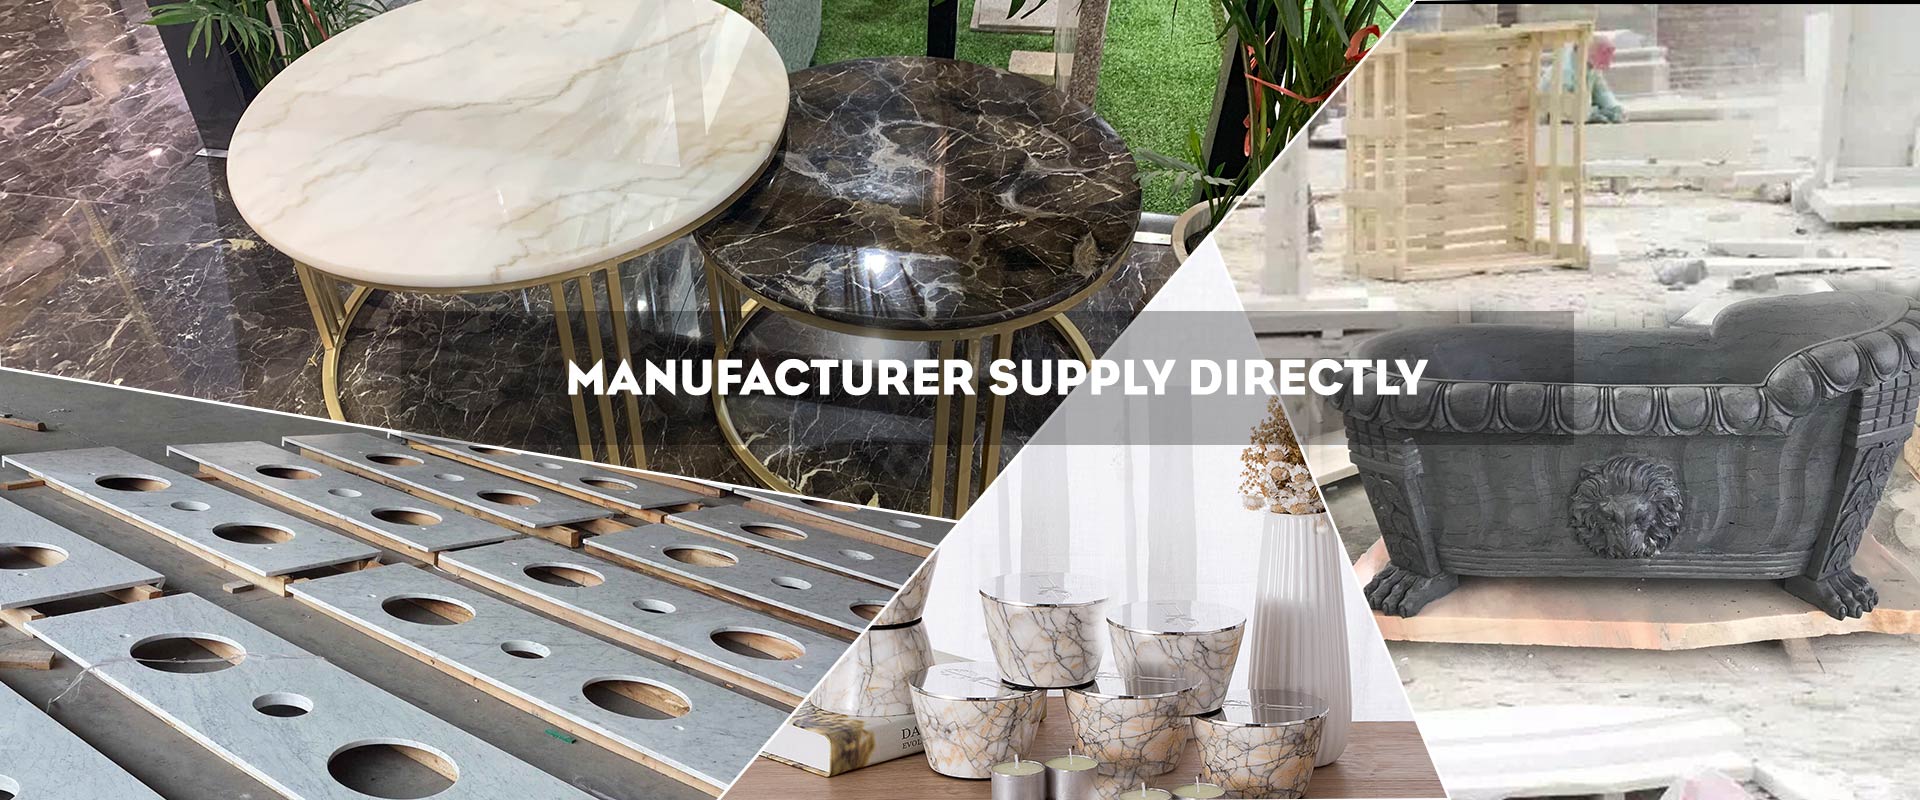 Manufacturer Supply Direct